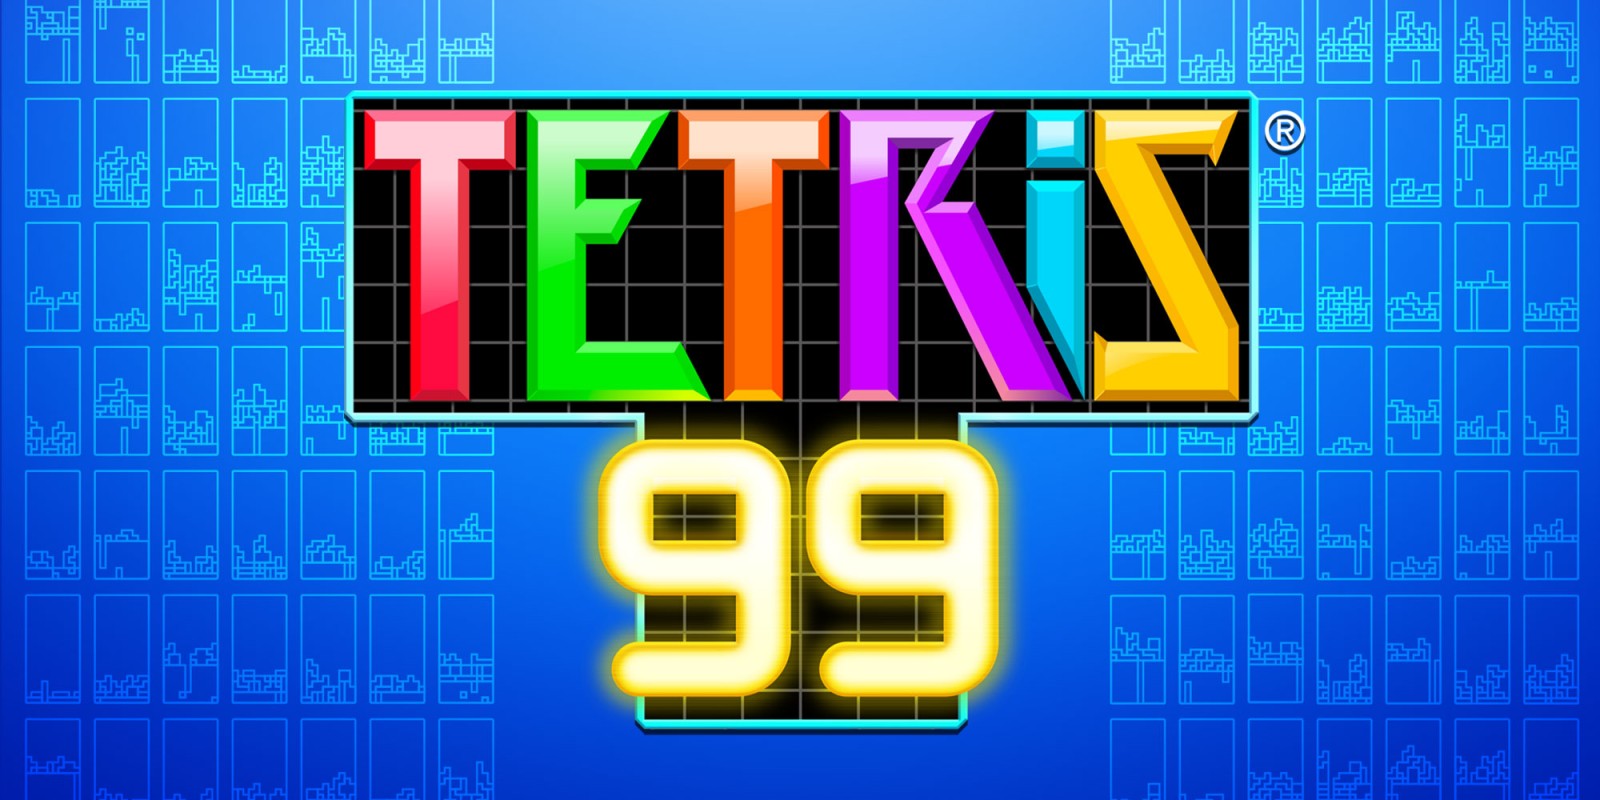 Tetris 99 - 7 Tips How to Improve